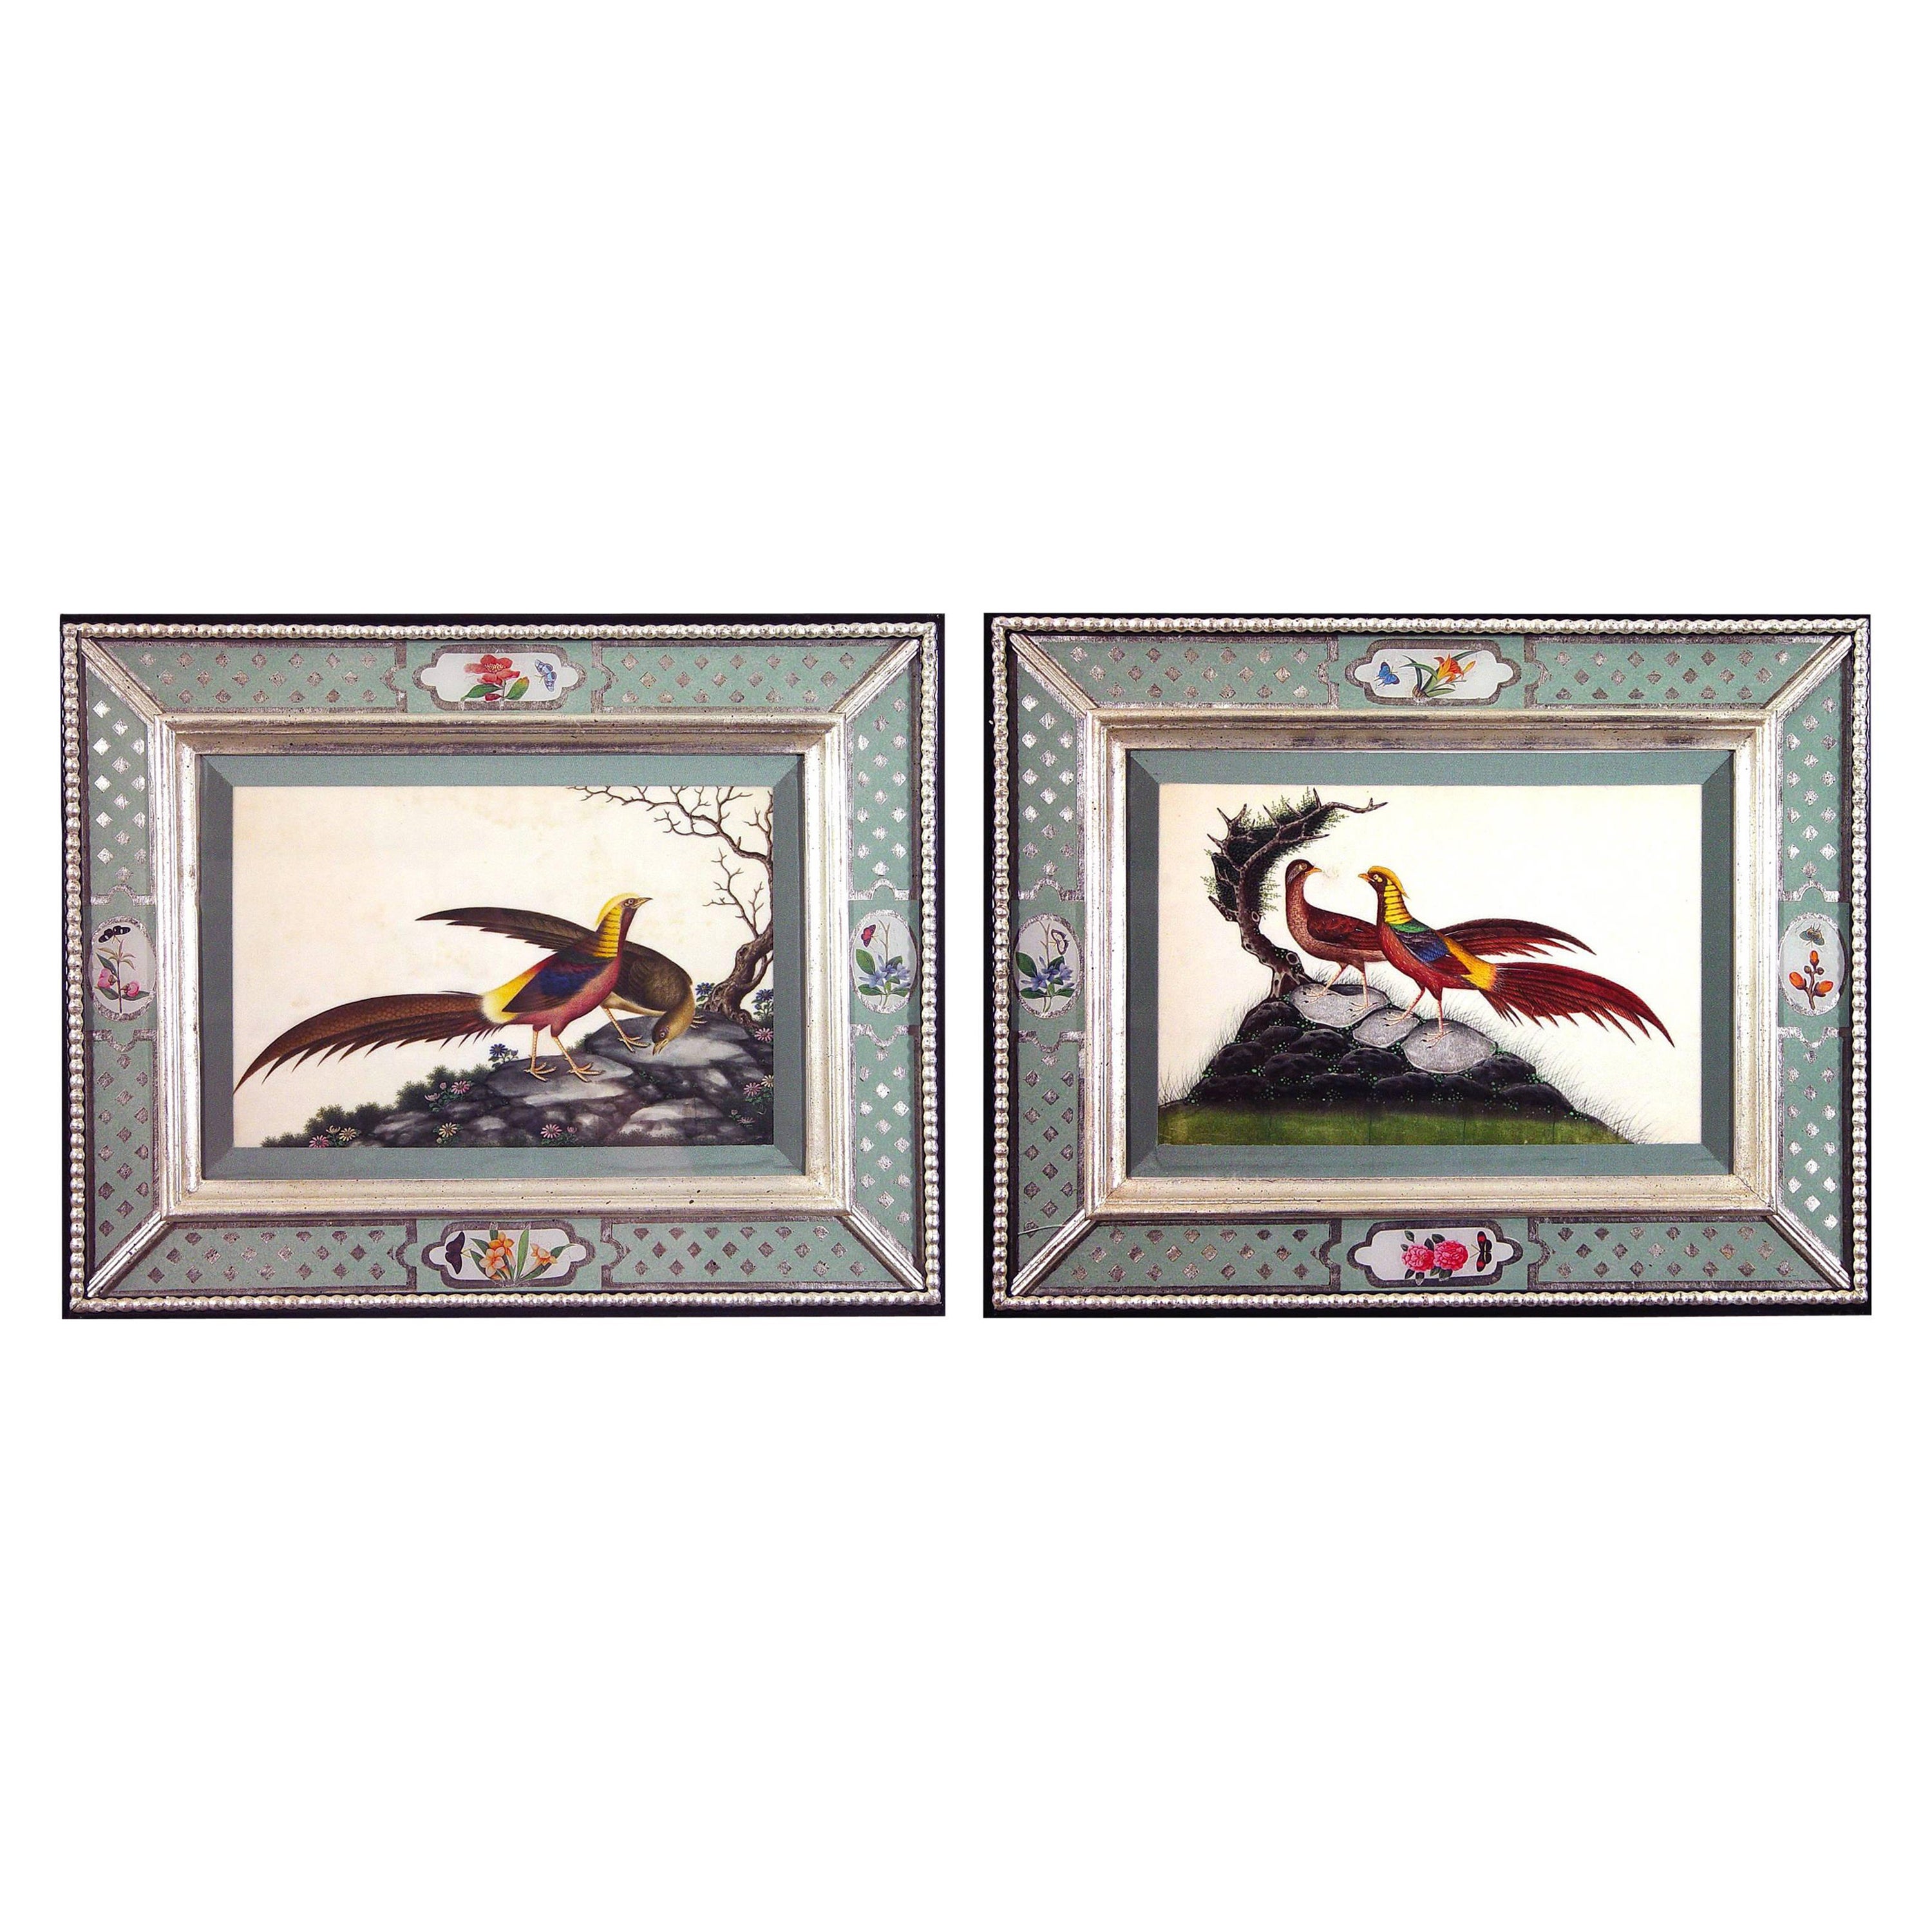 China Trade Watercolors of Birds in Églomisé Frames